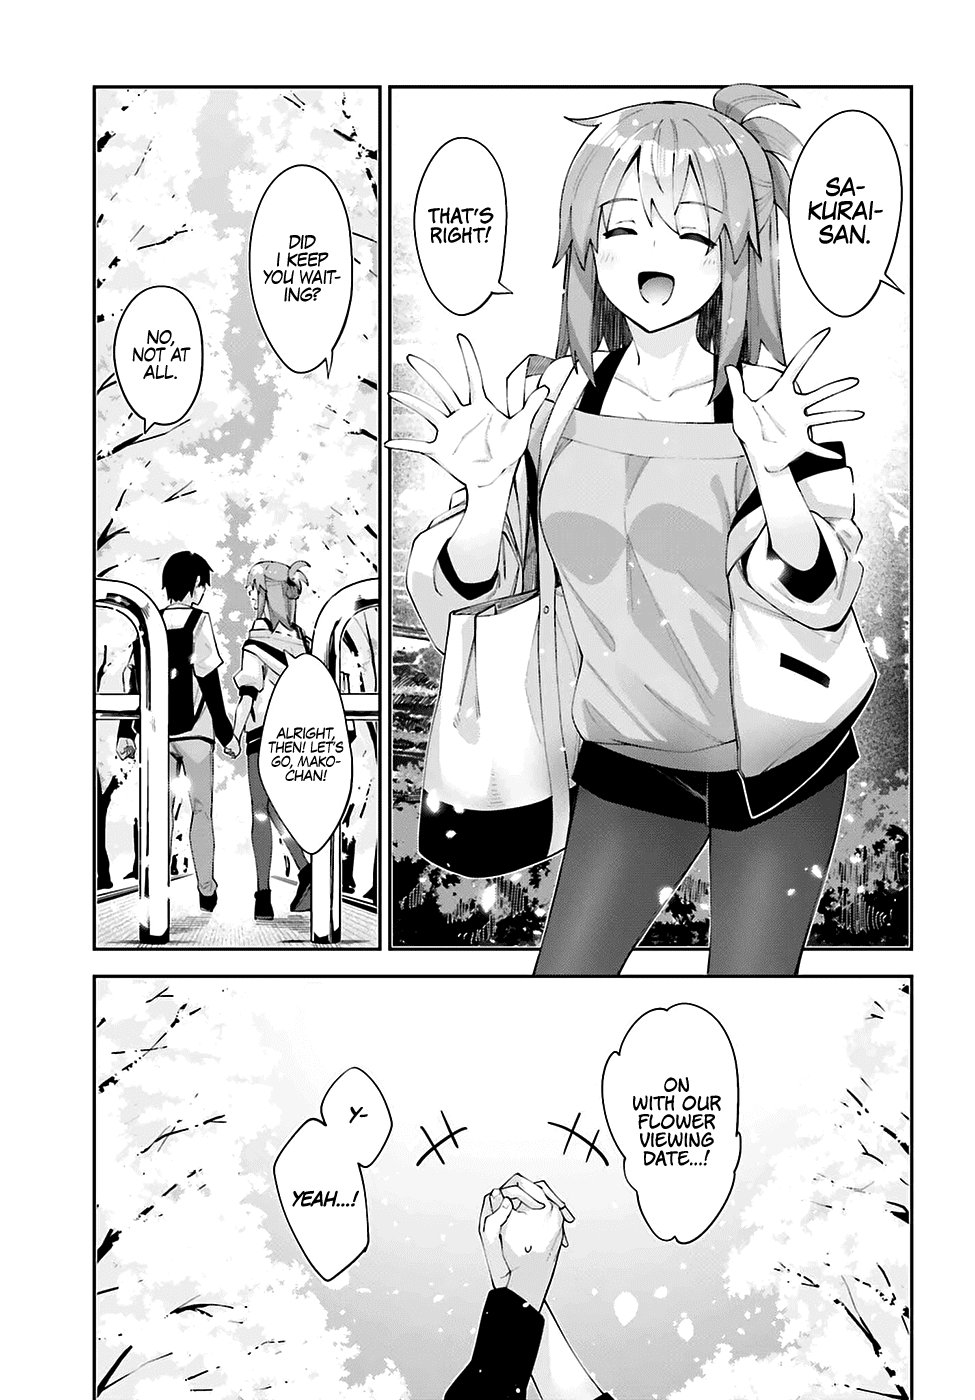 Sakurai-san Wants To Be Noticed - chapter 26 - #5